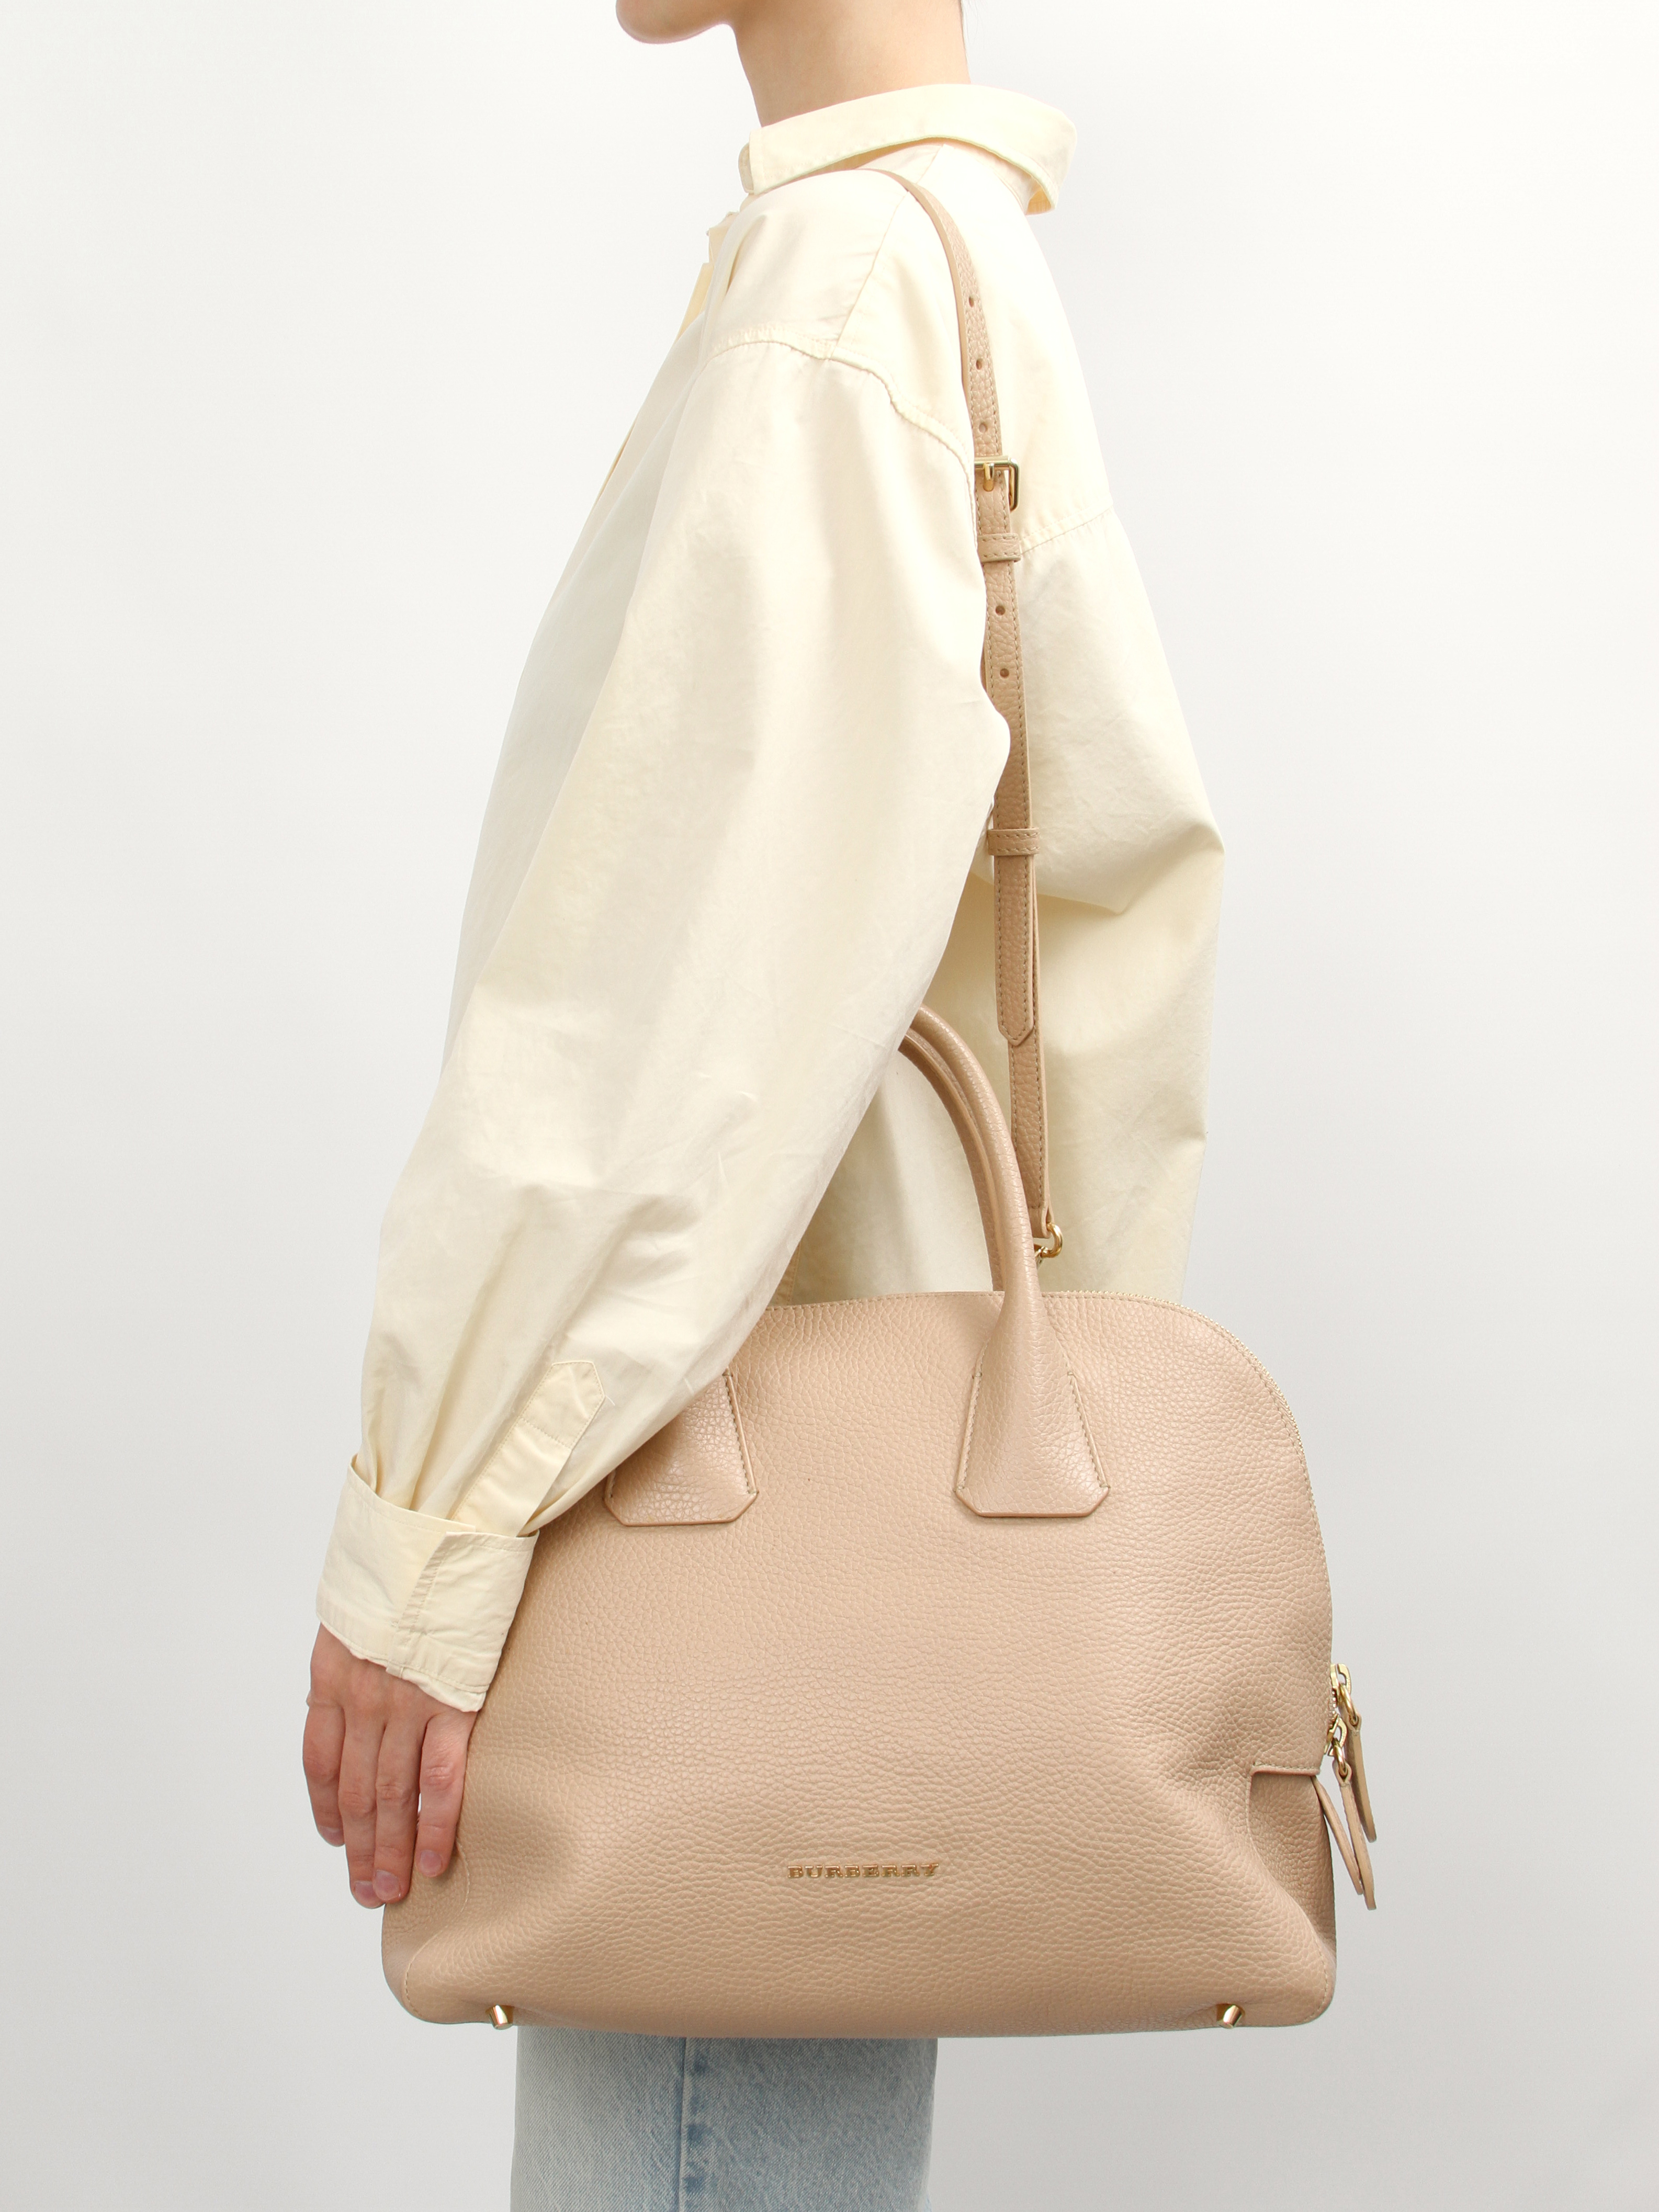 Объект желания: переизданная сумка Plume Hermès (фото 16)